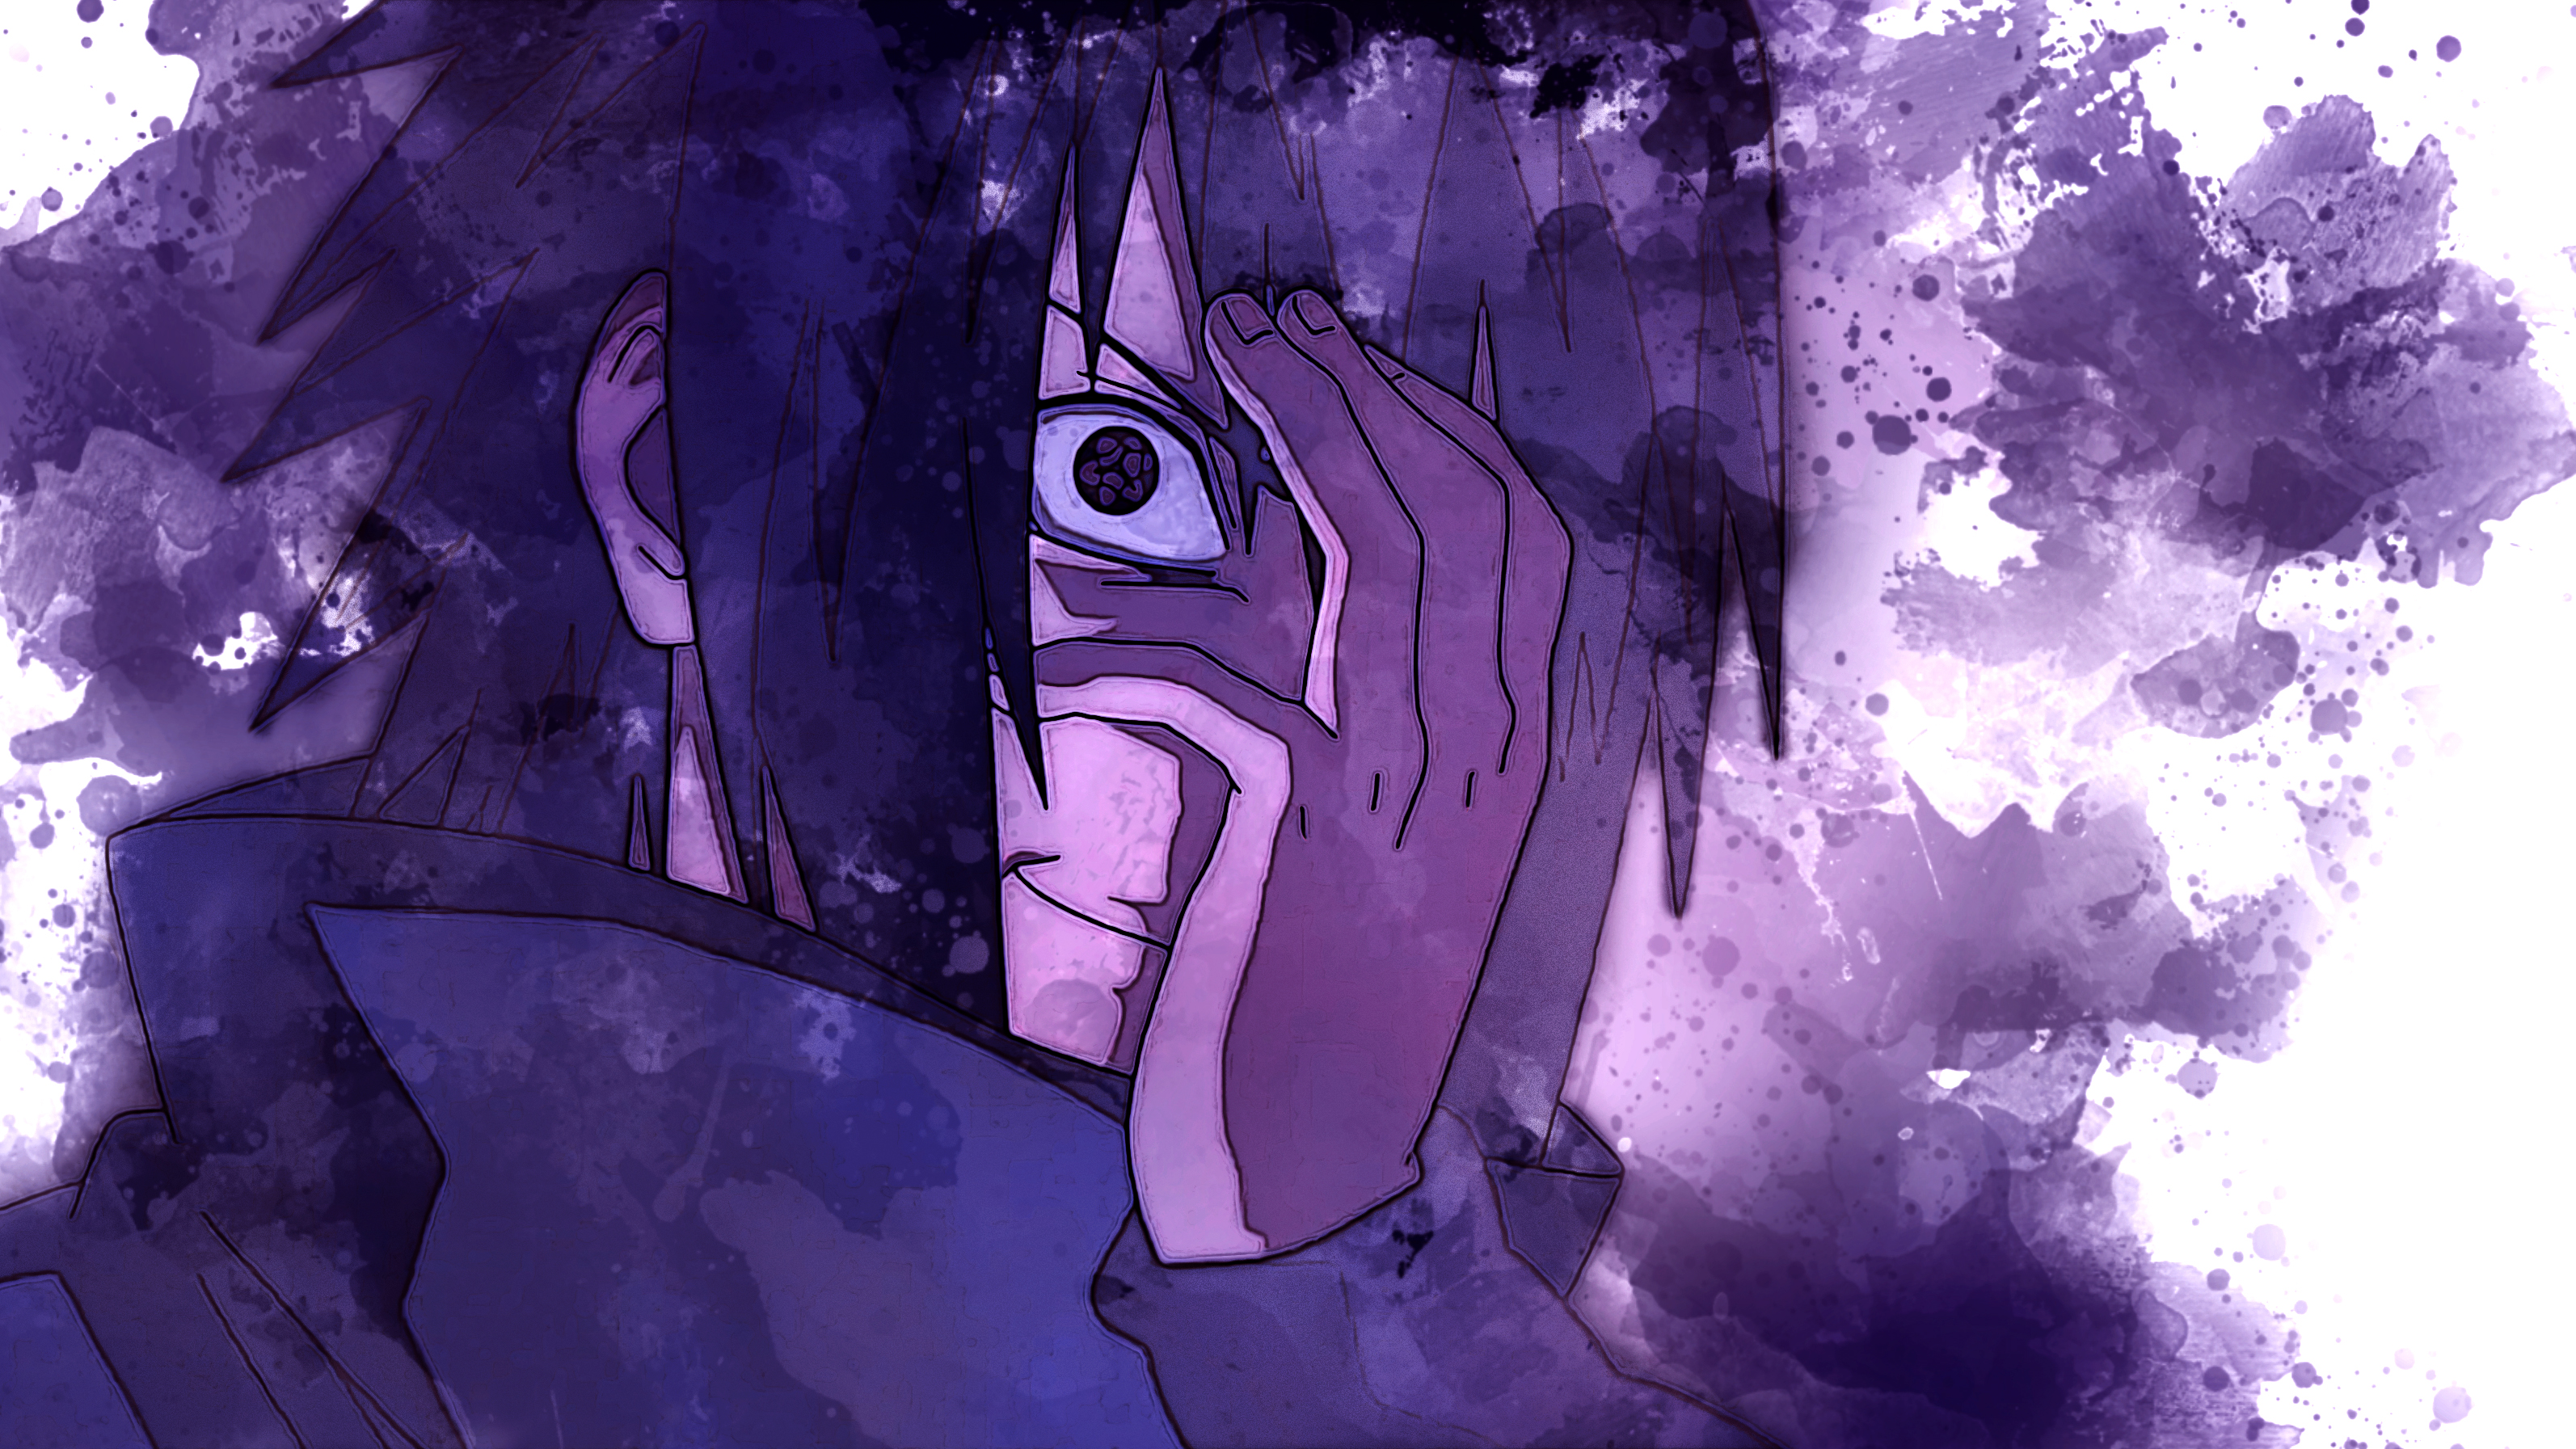 sasuke sharingan wallpaper,purple,violet,cg artwork,illustration,graphic design